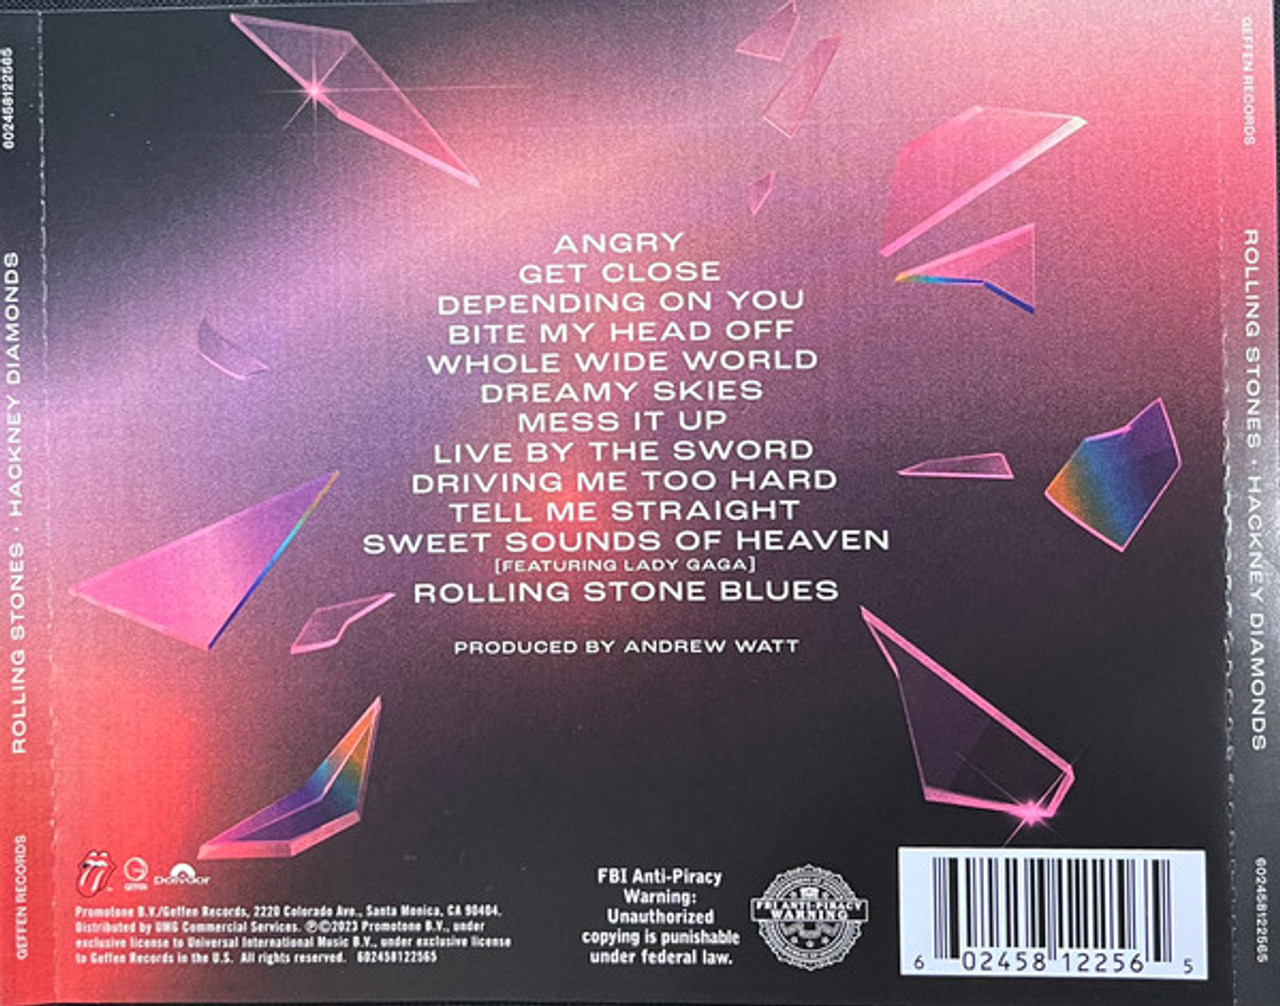 Hackney Diamonds - Rolling Stones (#602458122565)